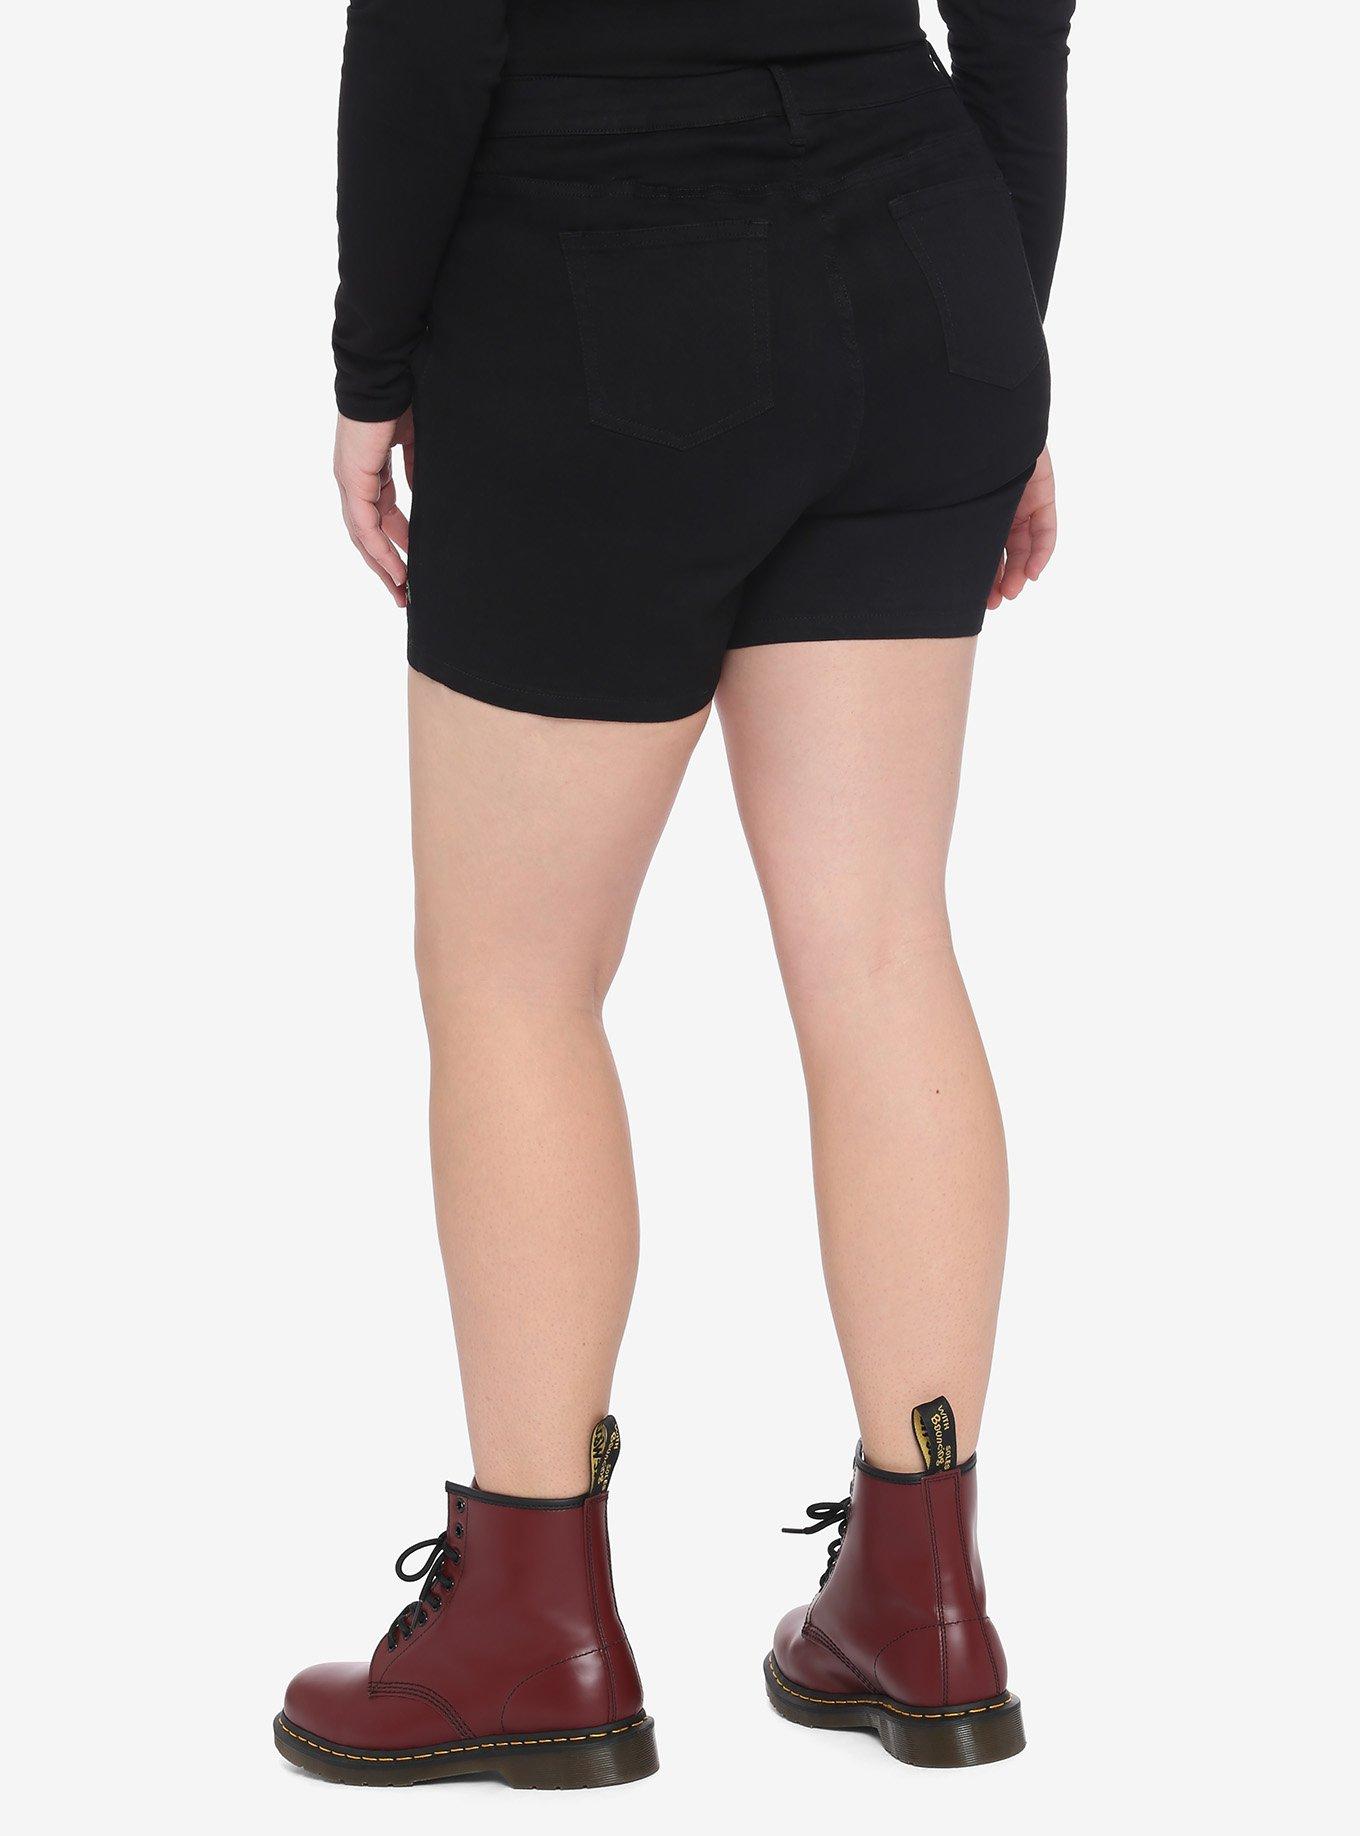 Skull Cherries Embroidered Ultra Hi-Rise Black Denim Shorts Plus Size, CHERRY BOMB, alternate